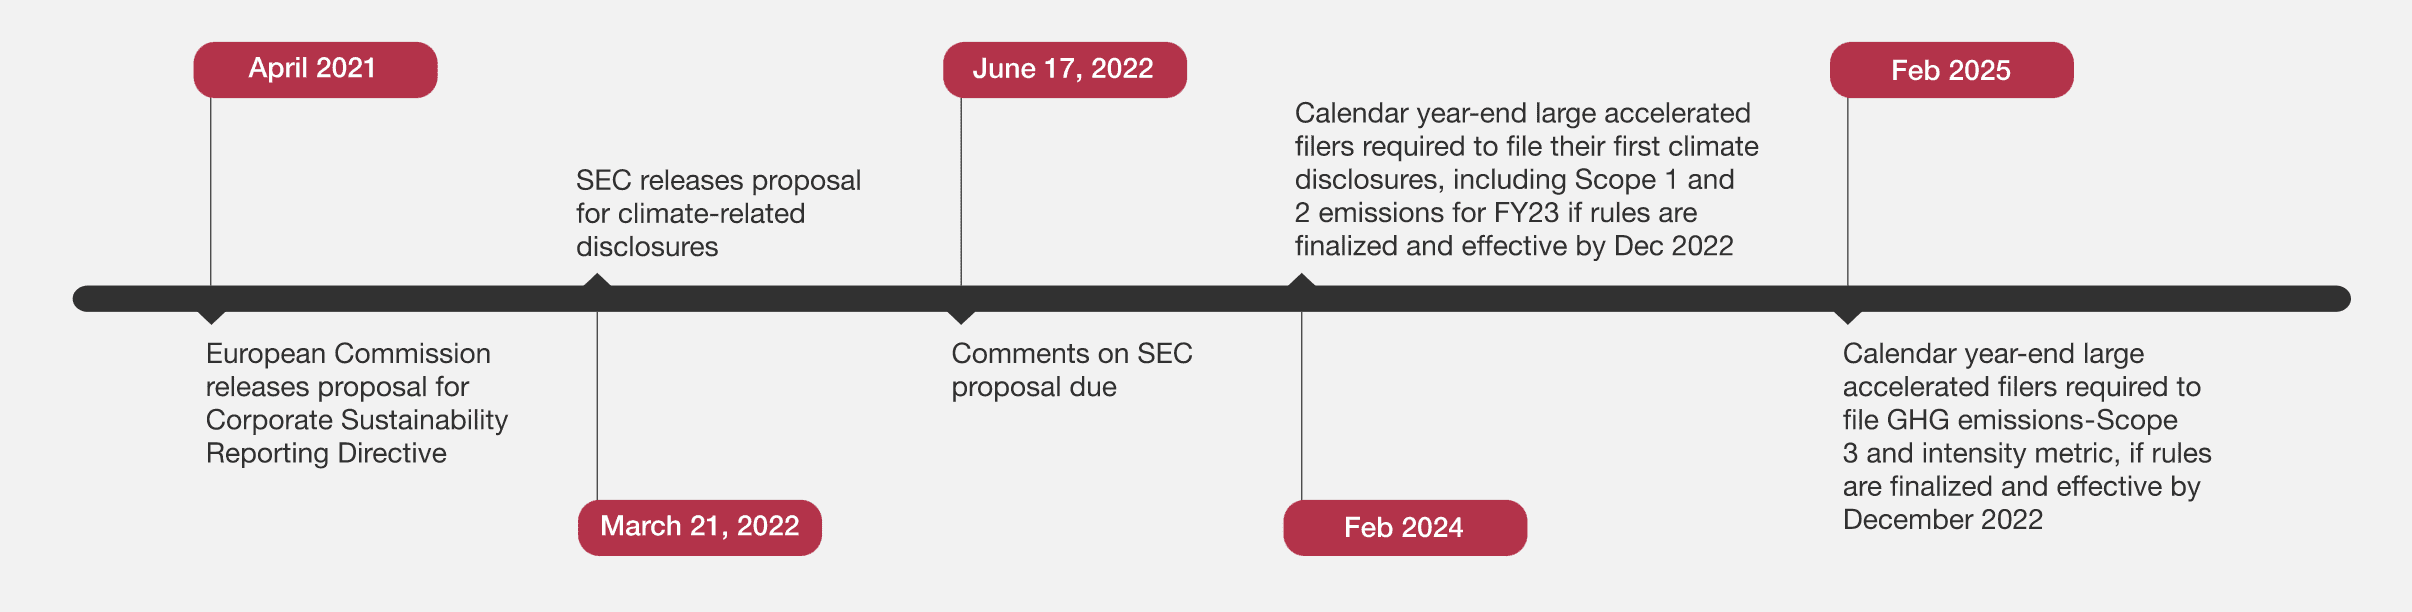 Timeline of key dates in SEC proposal